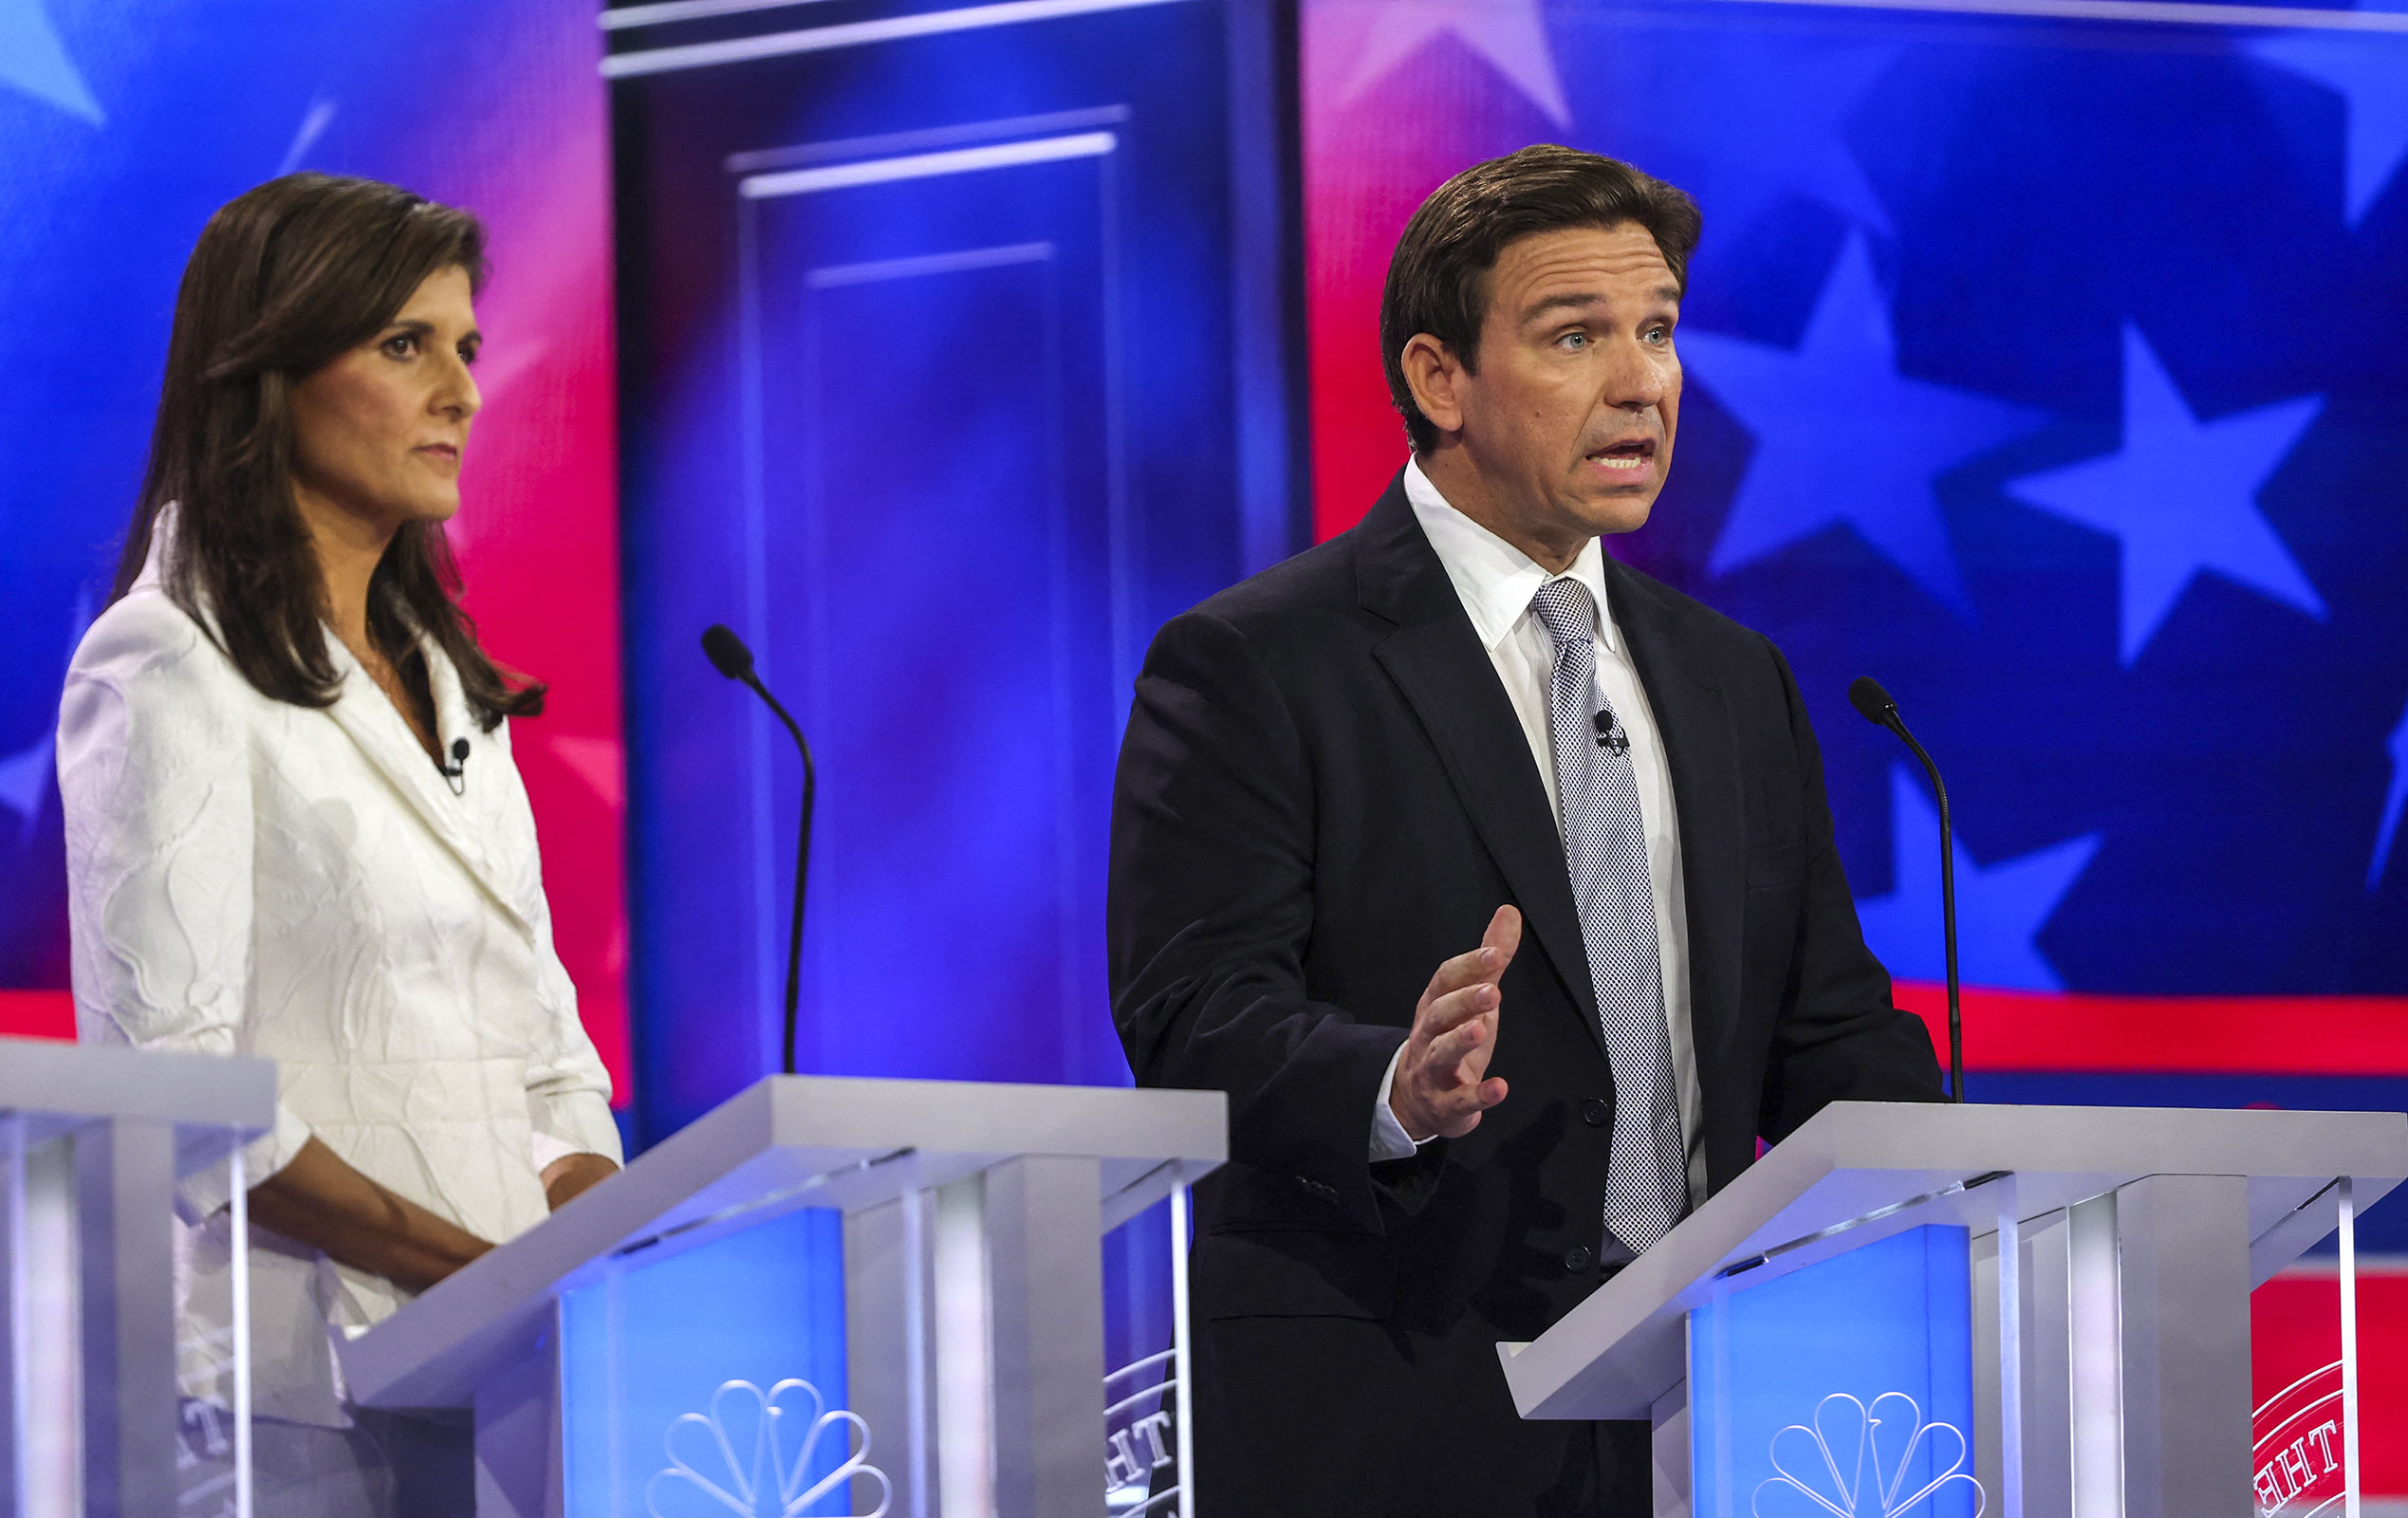 Florida Gov. Ron DeSantis speaks at the third Republican presidential debate on Wednesday in Miami.